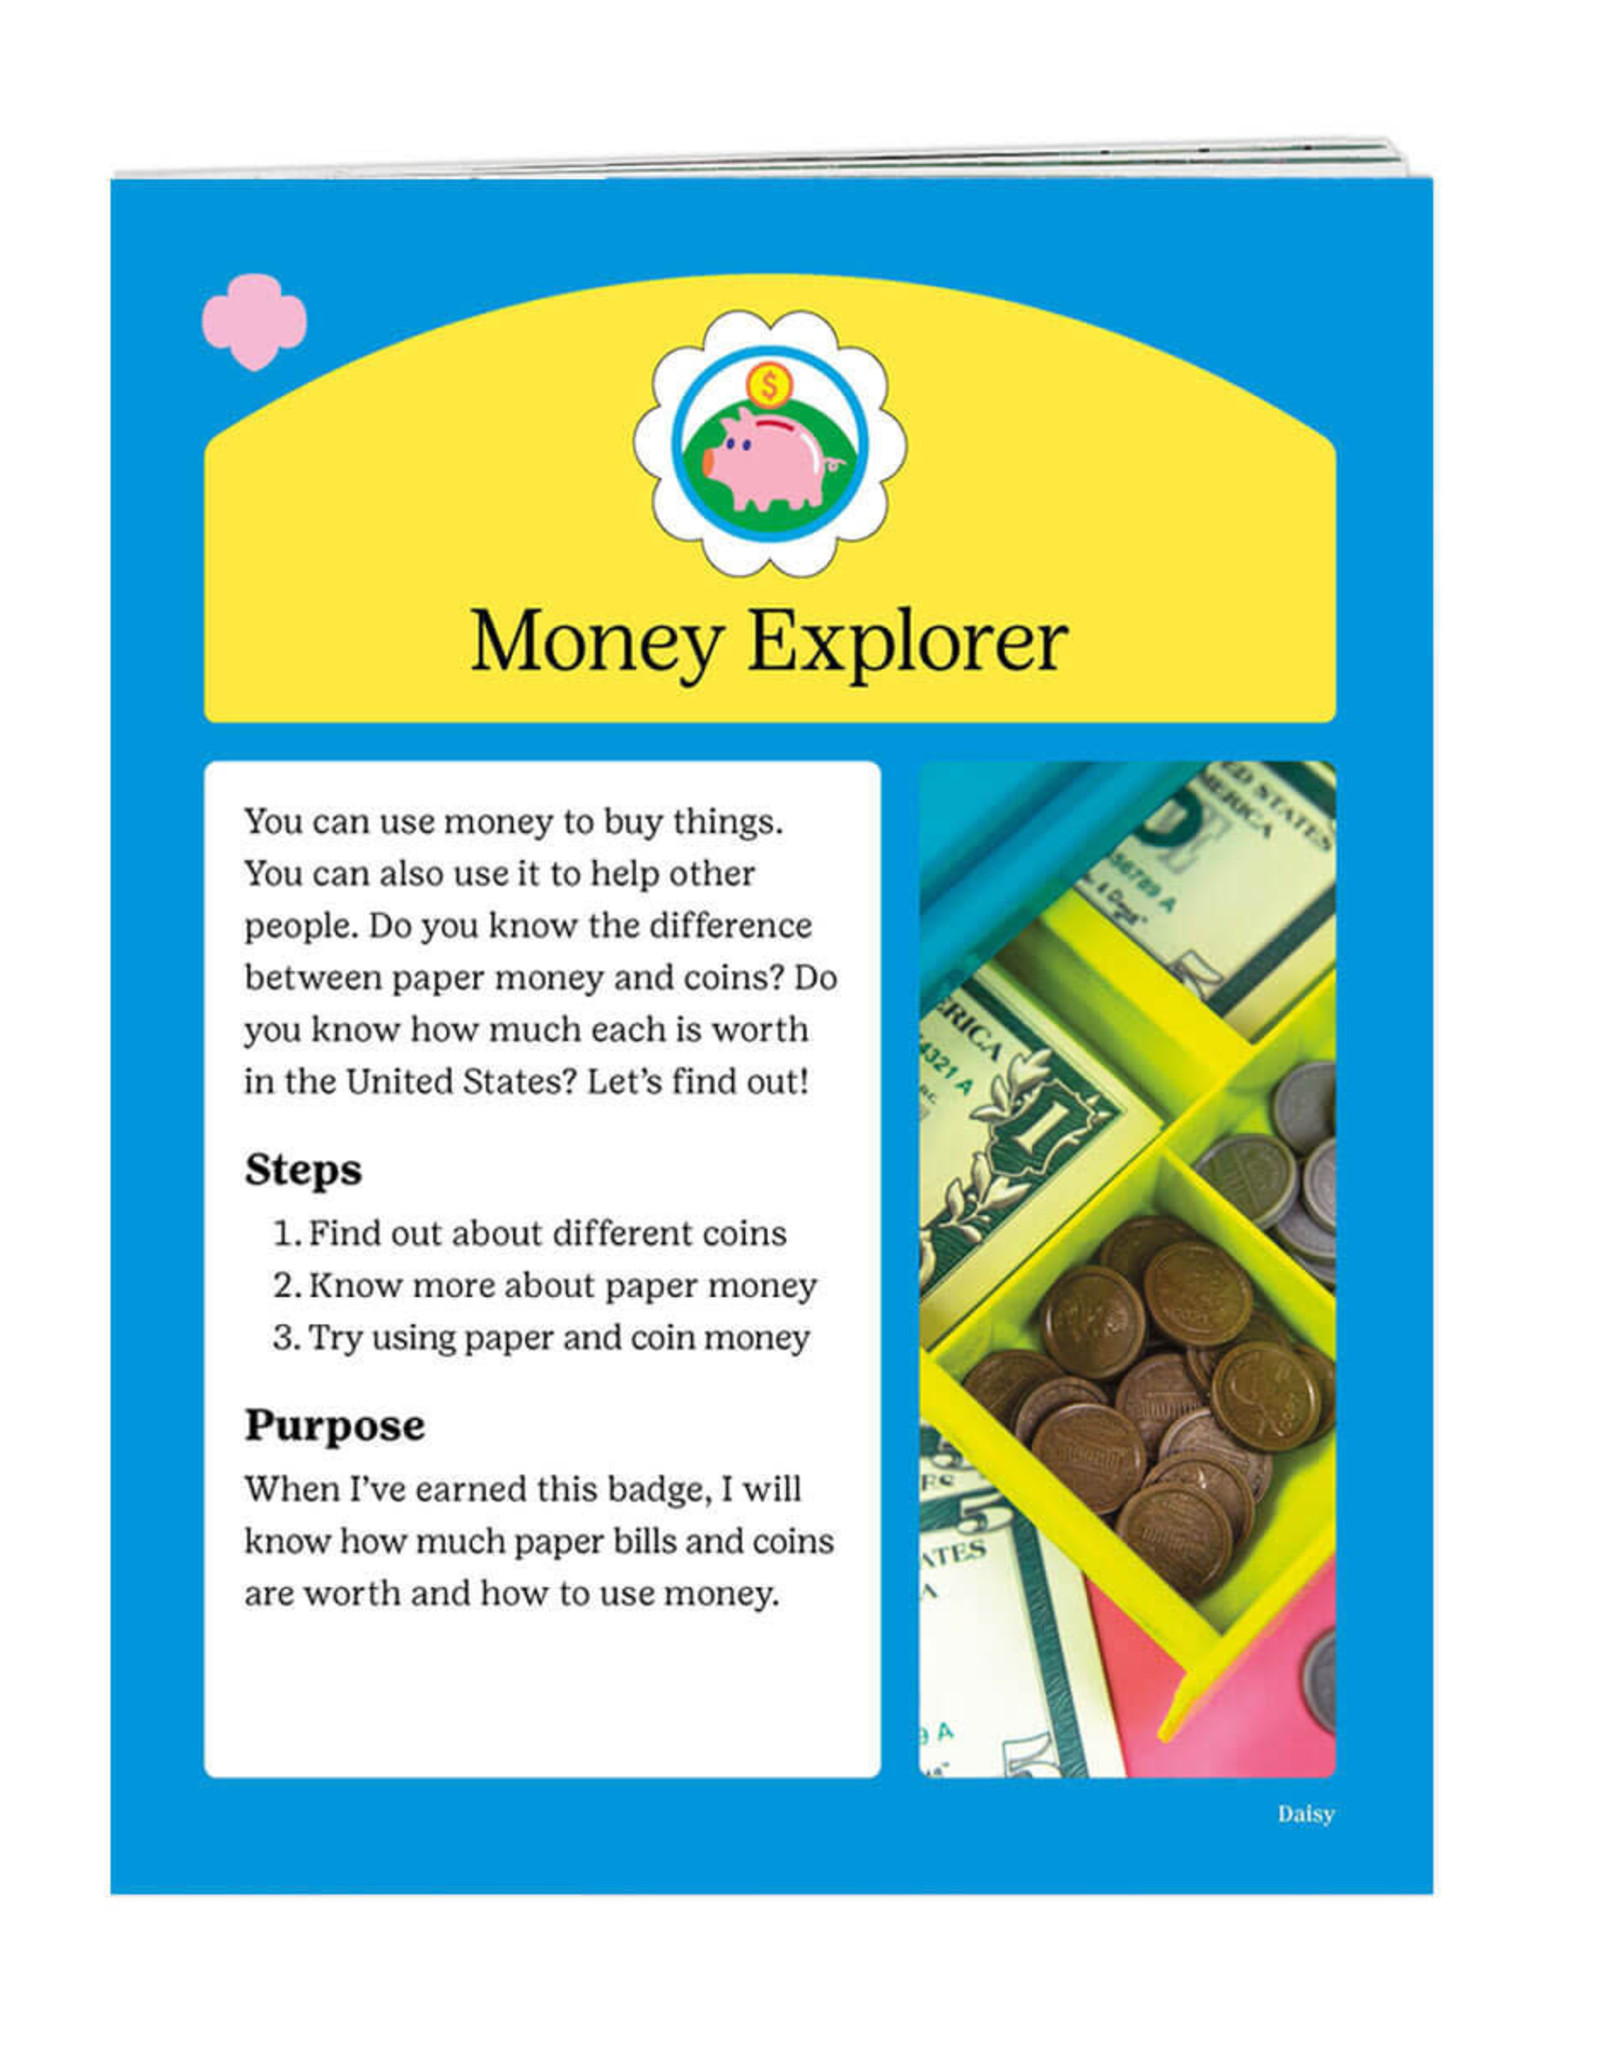 Daisy Money Explorer Badge Requirements